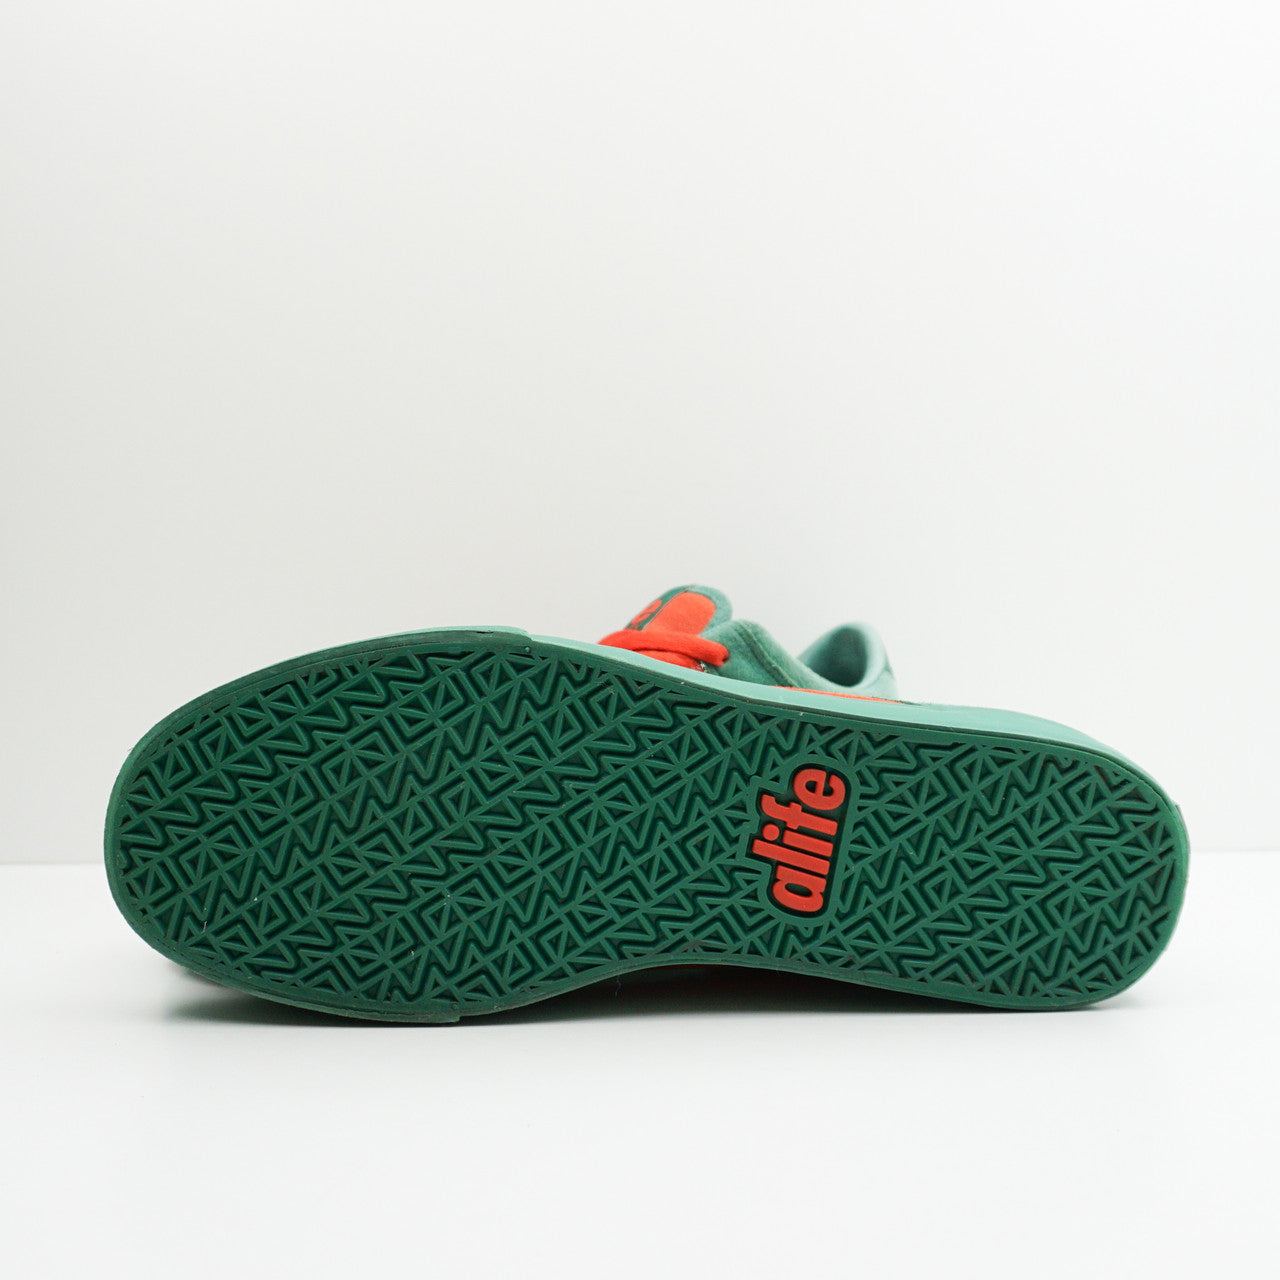 Alife Sneakers Green/Orange